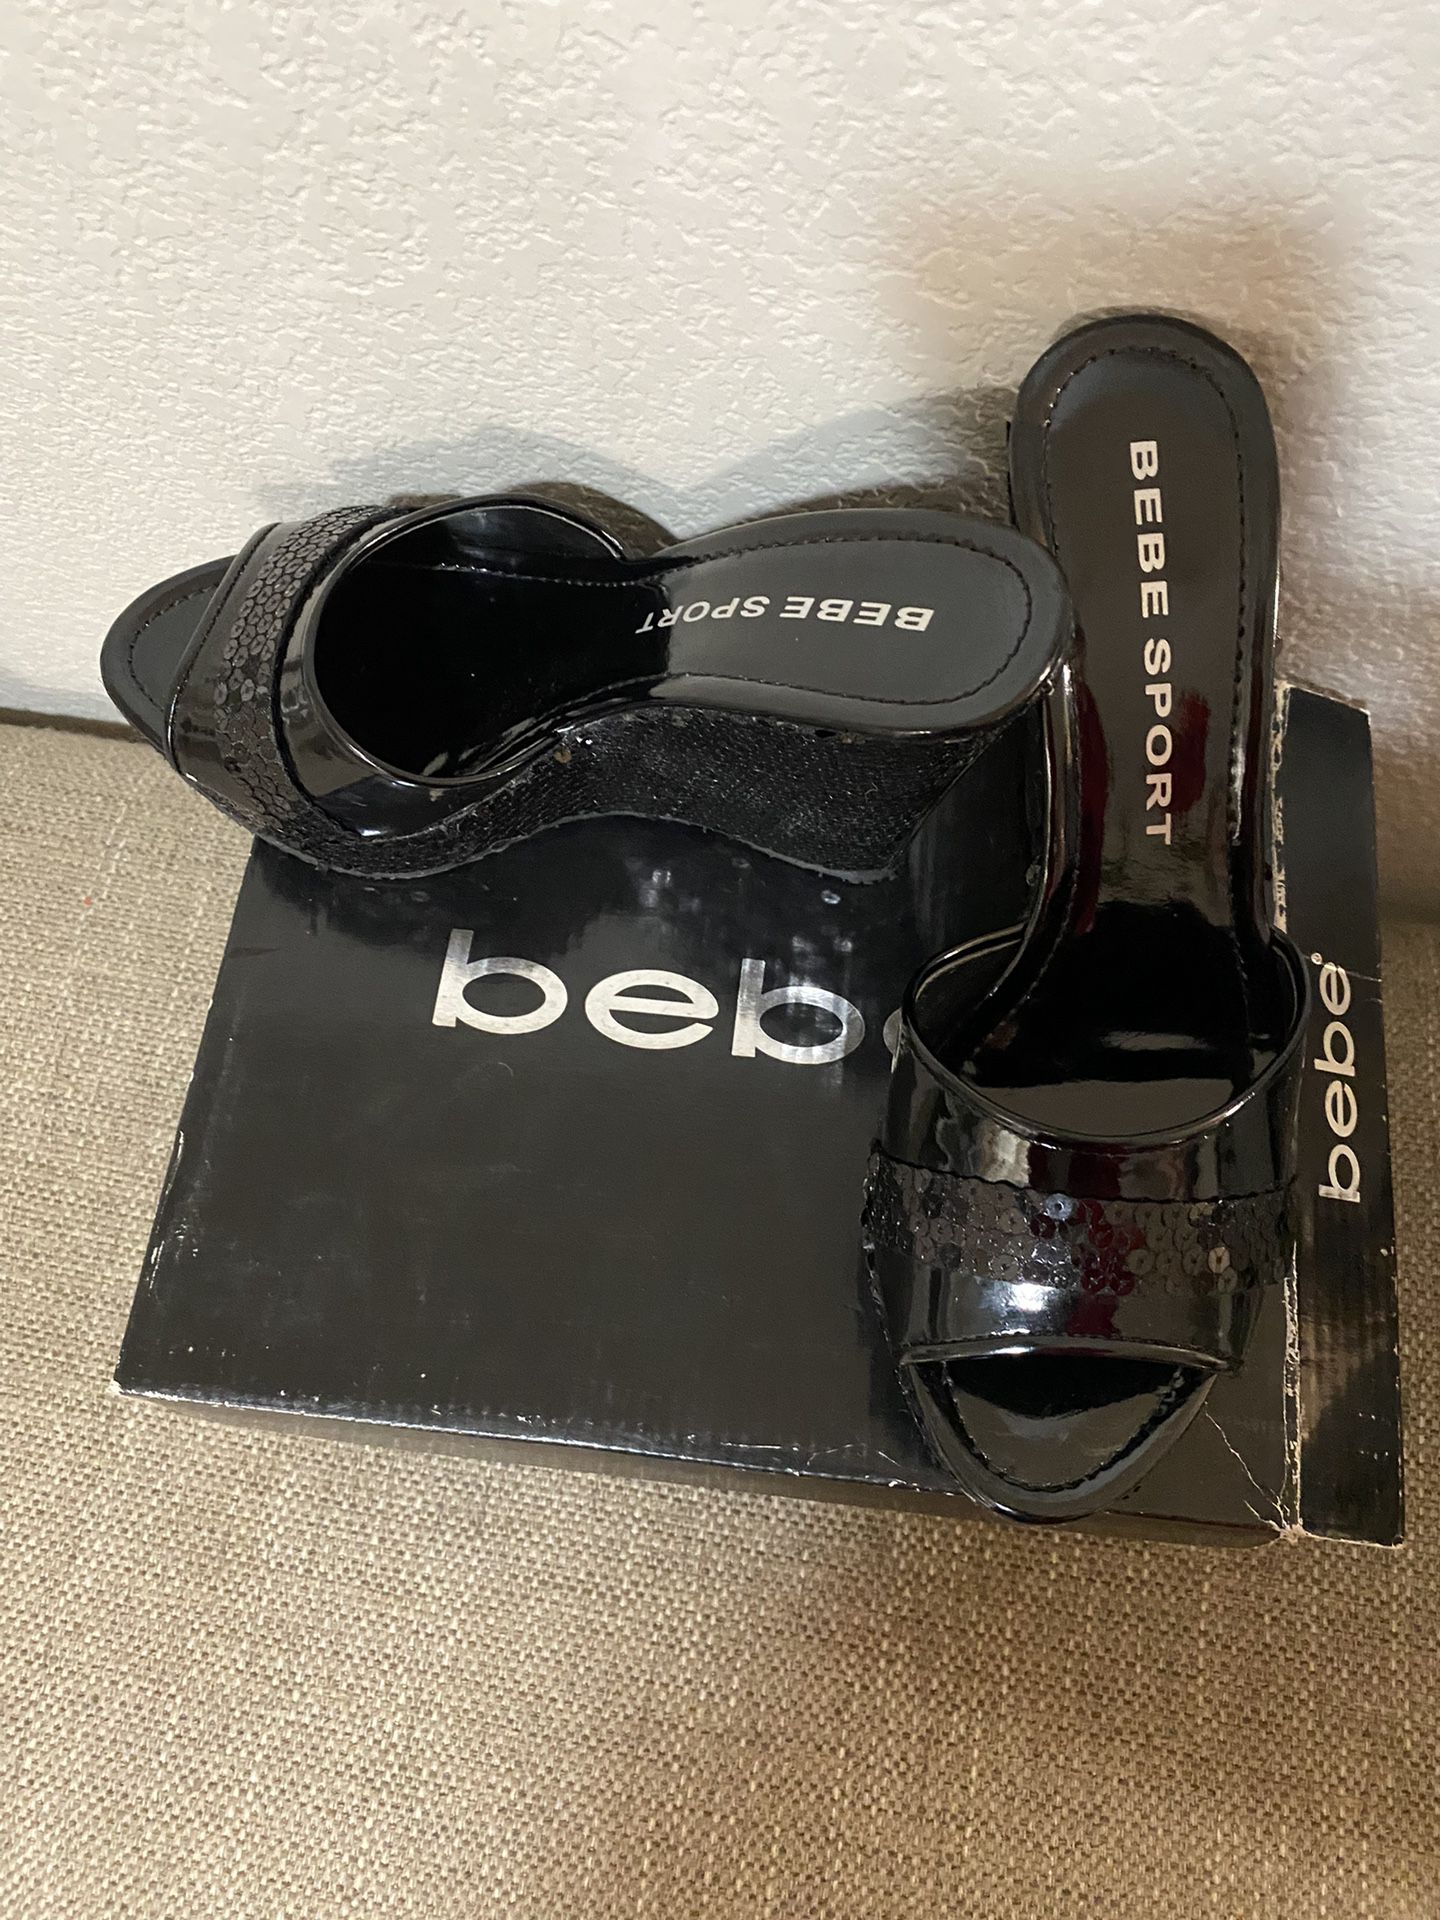 Bebe Sport Wedge Shoes